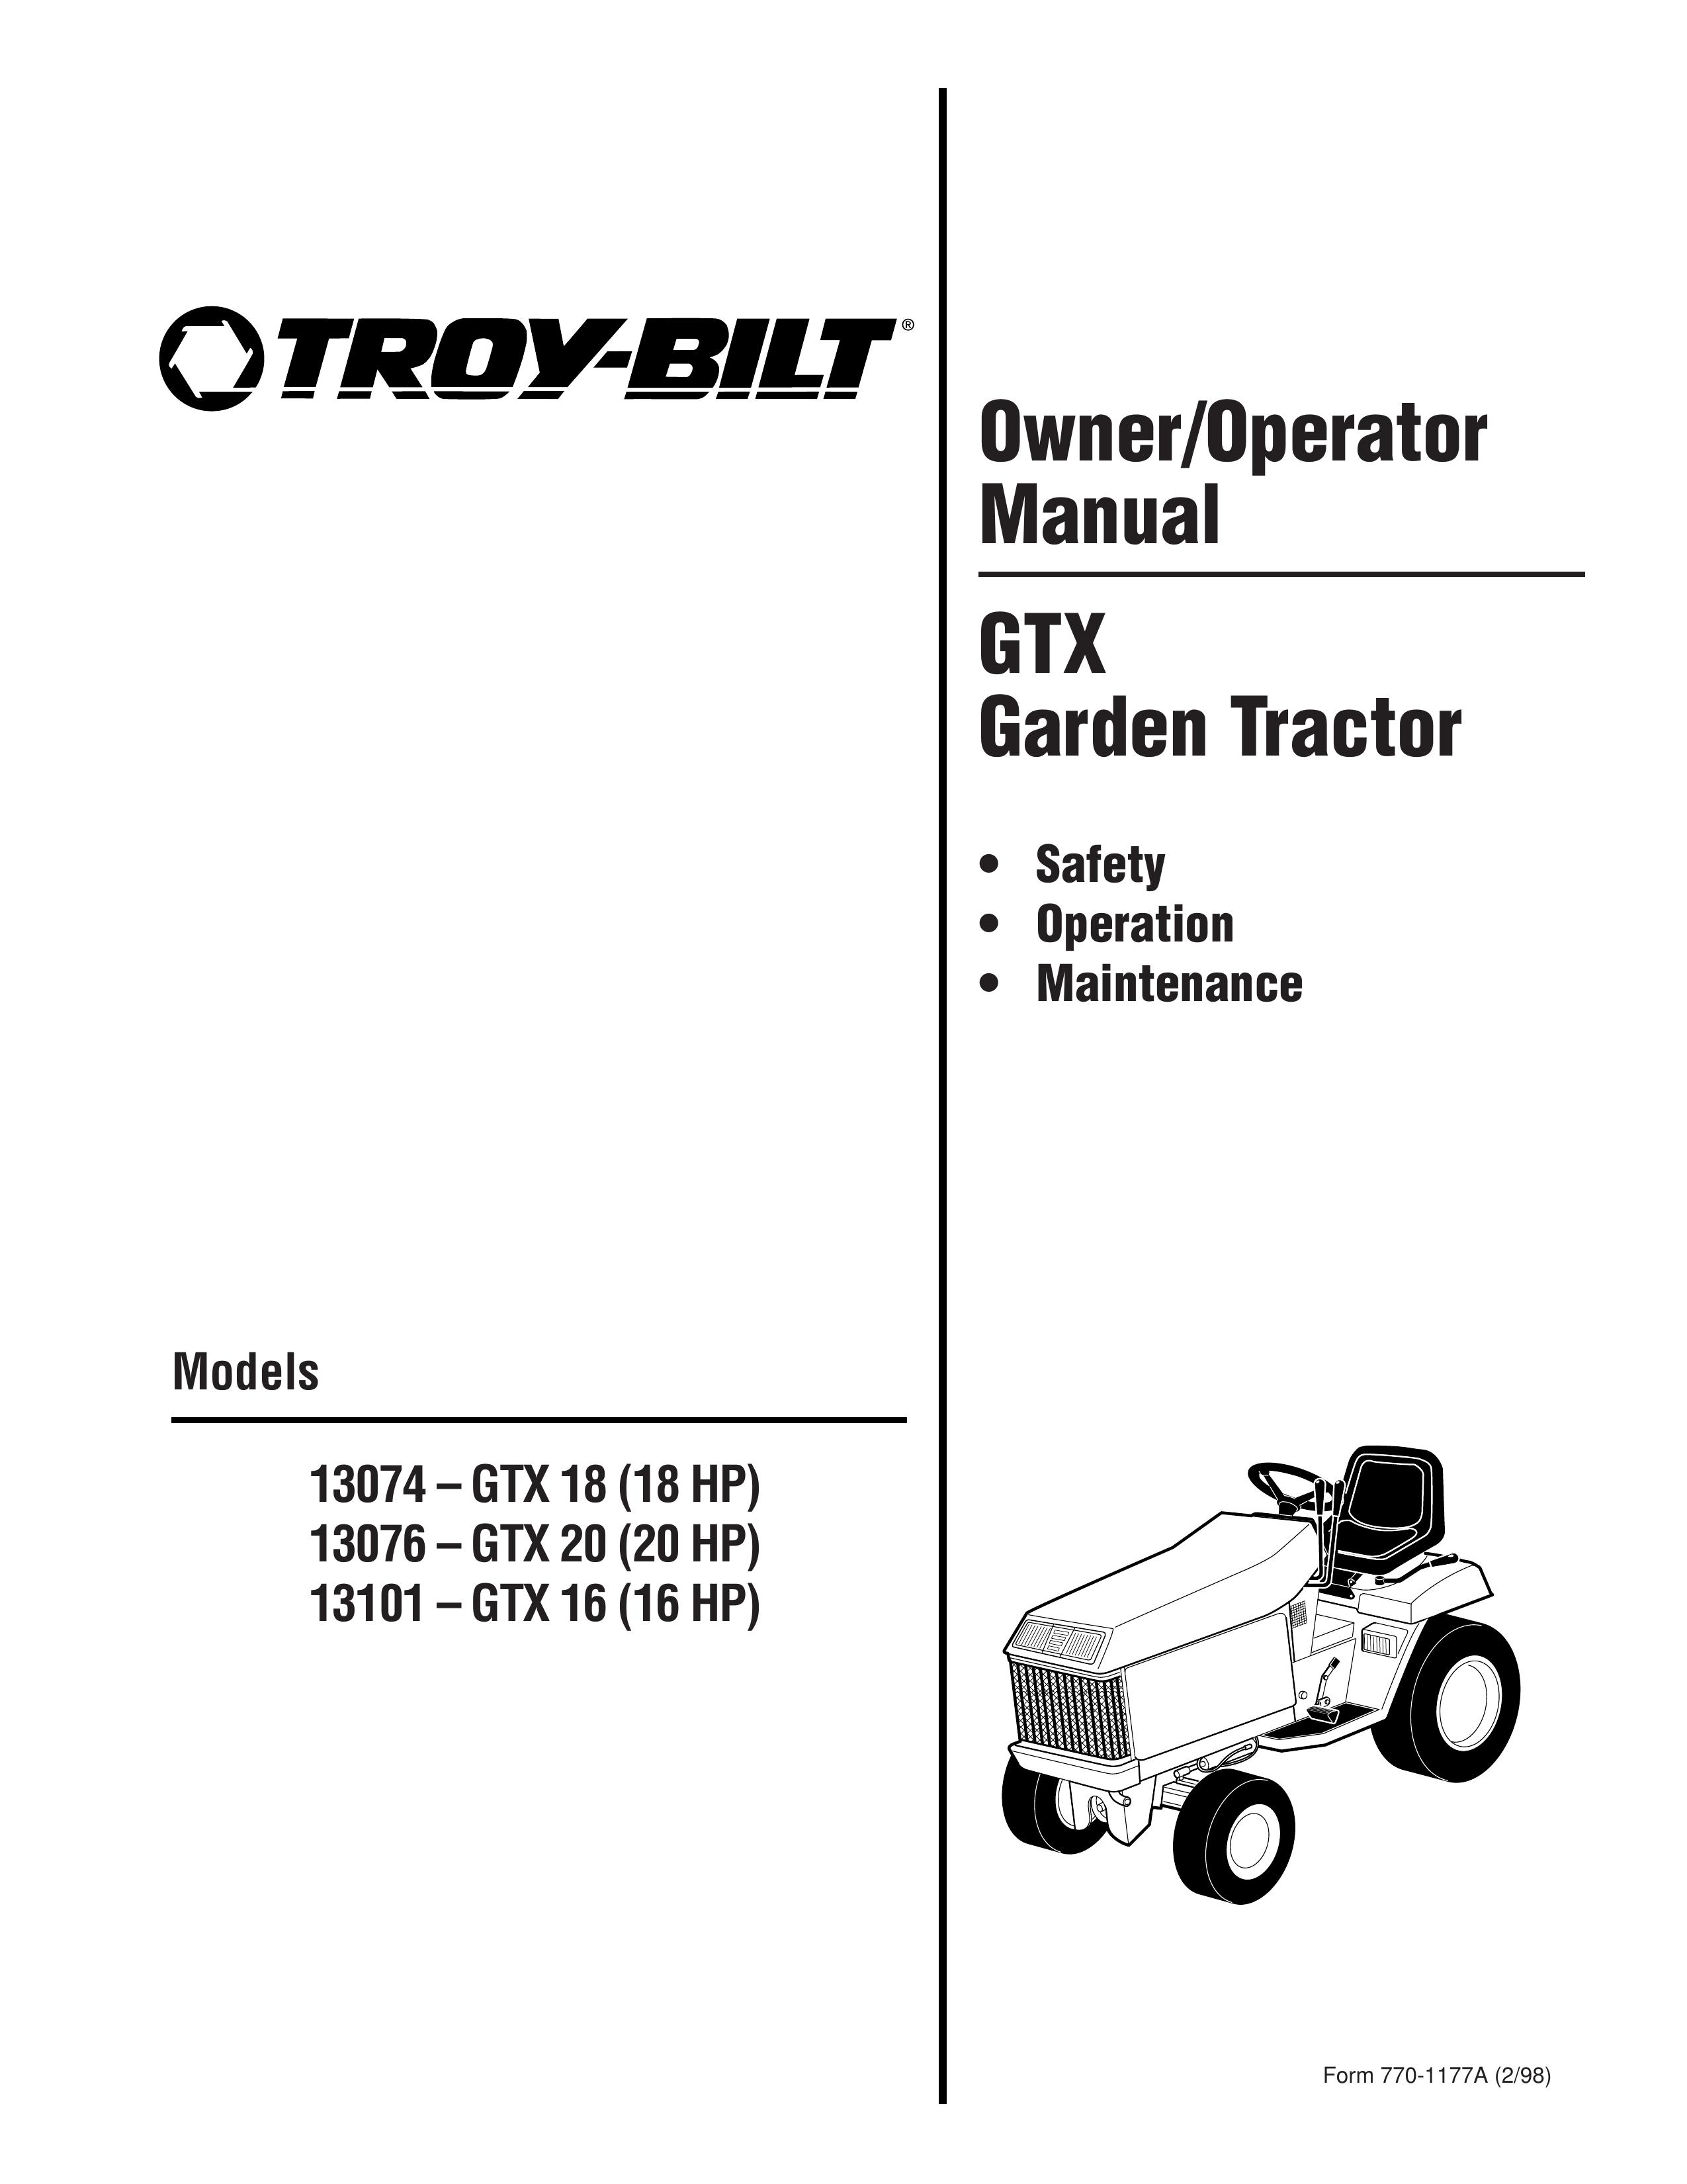 Troy-Bilt 13101-GTX 16 Lawn Mower User Manual